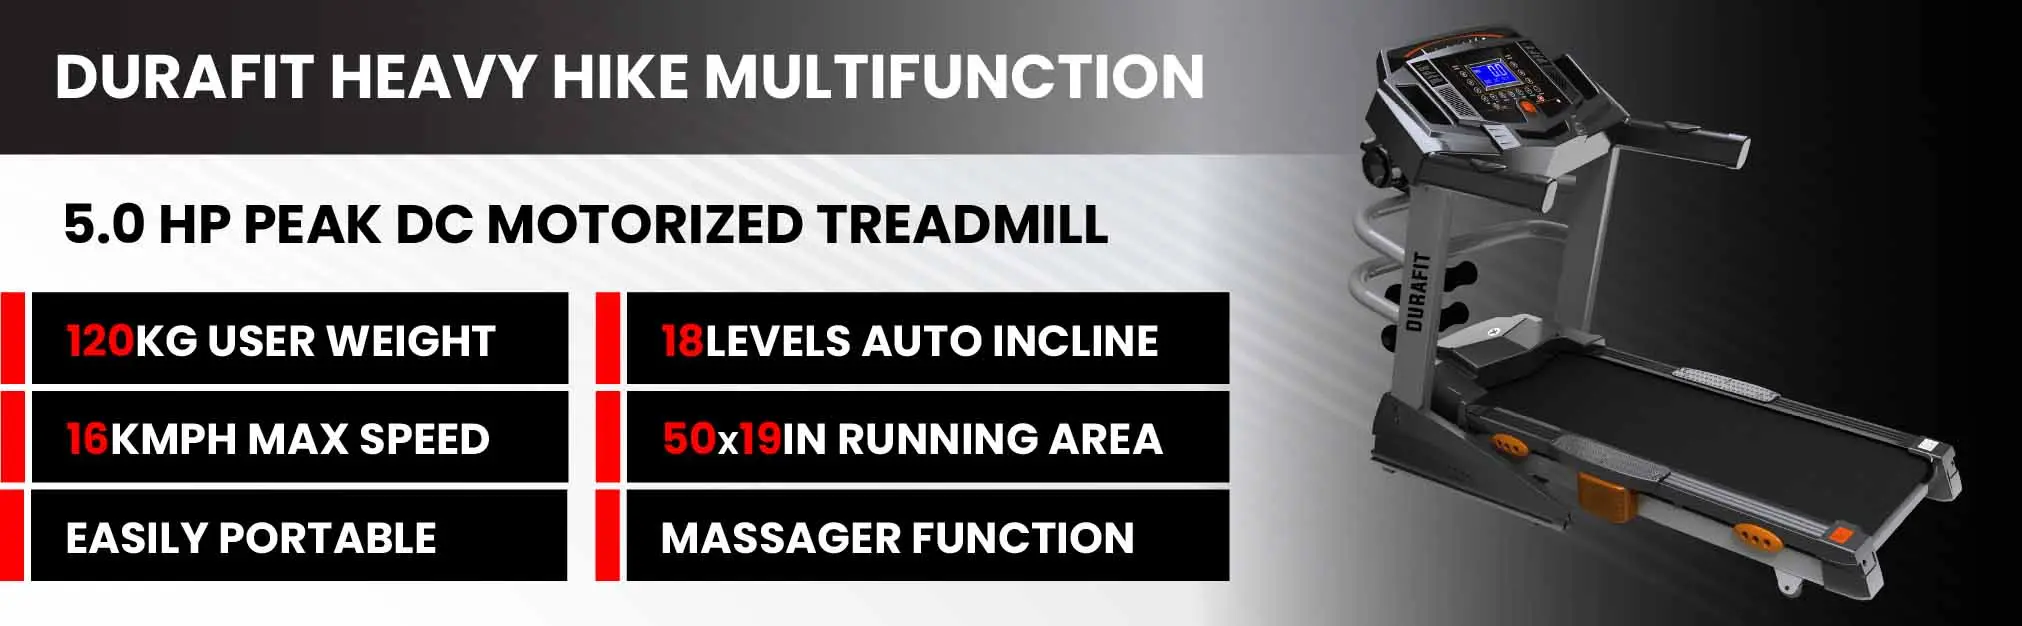 Durafit Heavy hike Multifunction Treadmill